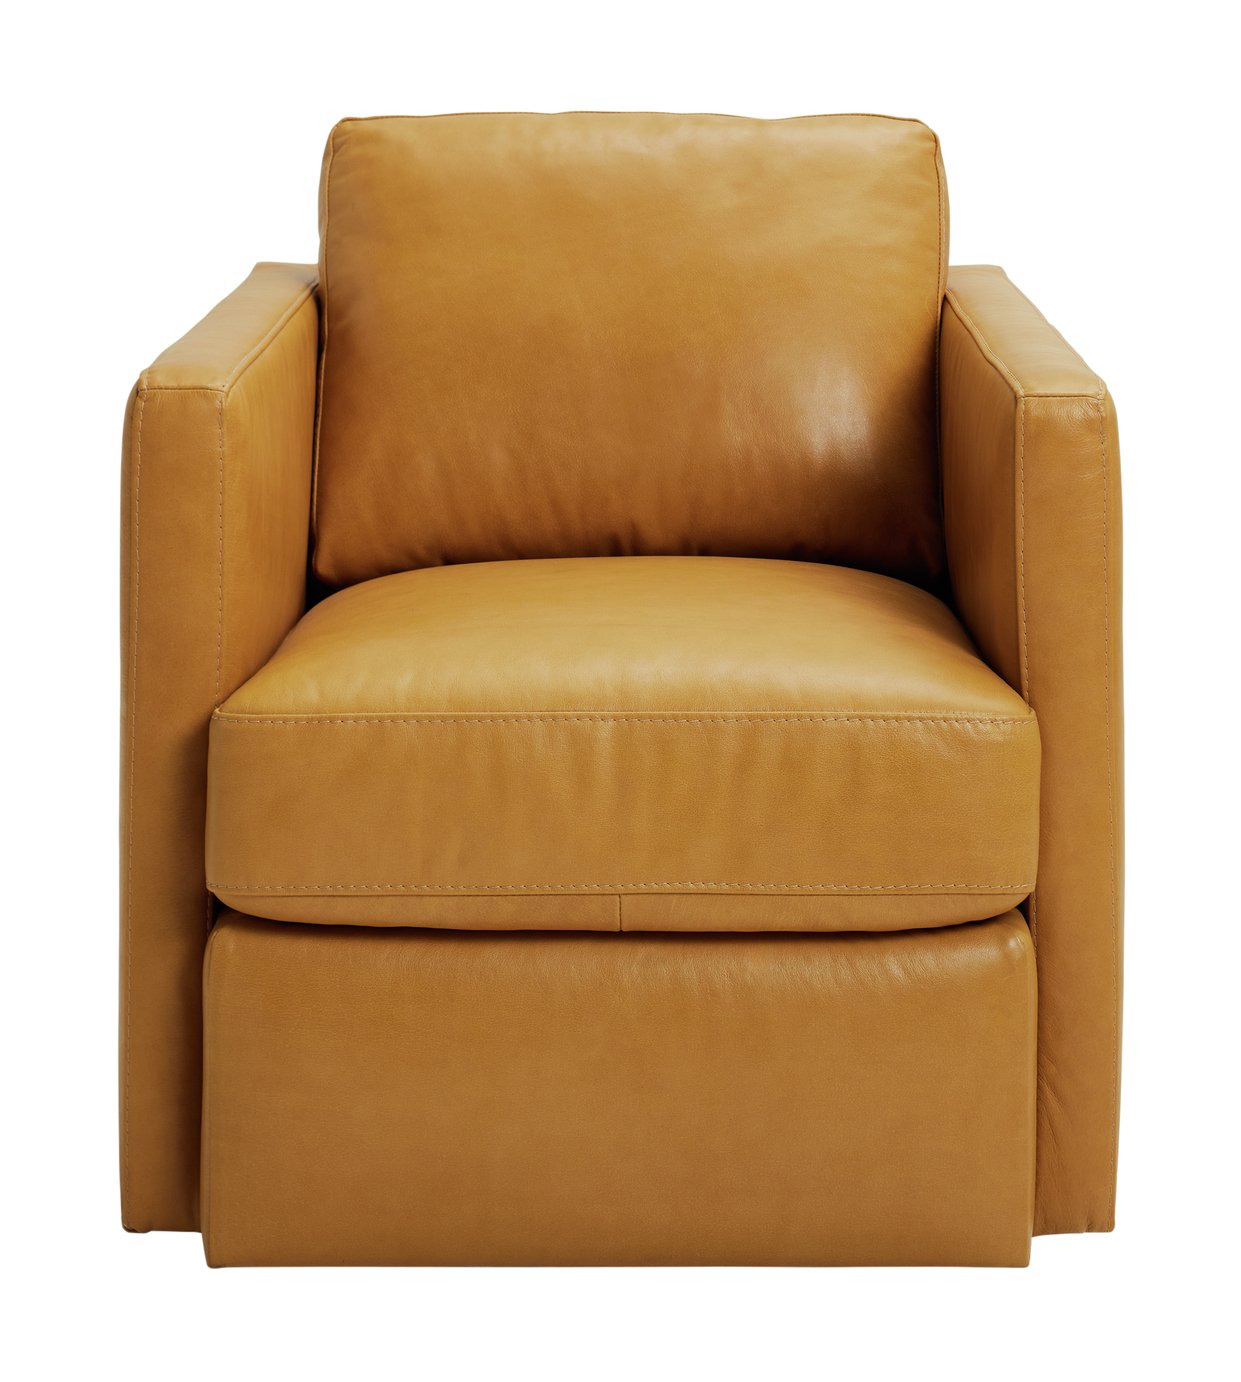 Habitat Durham Leather Swivel Chair - Tan